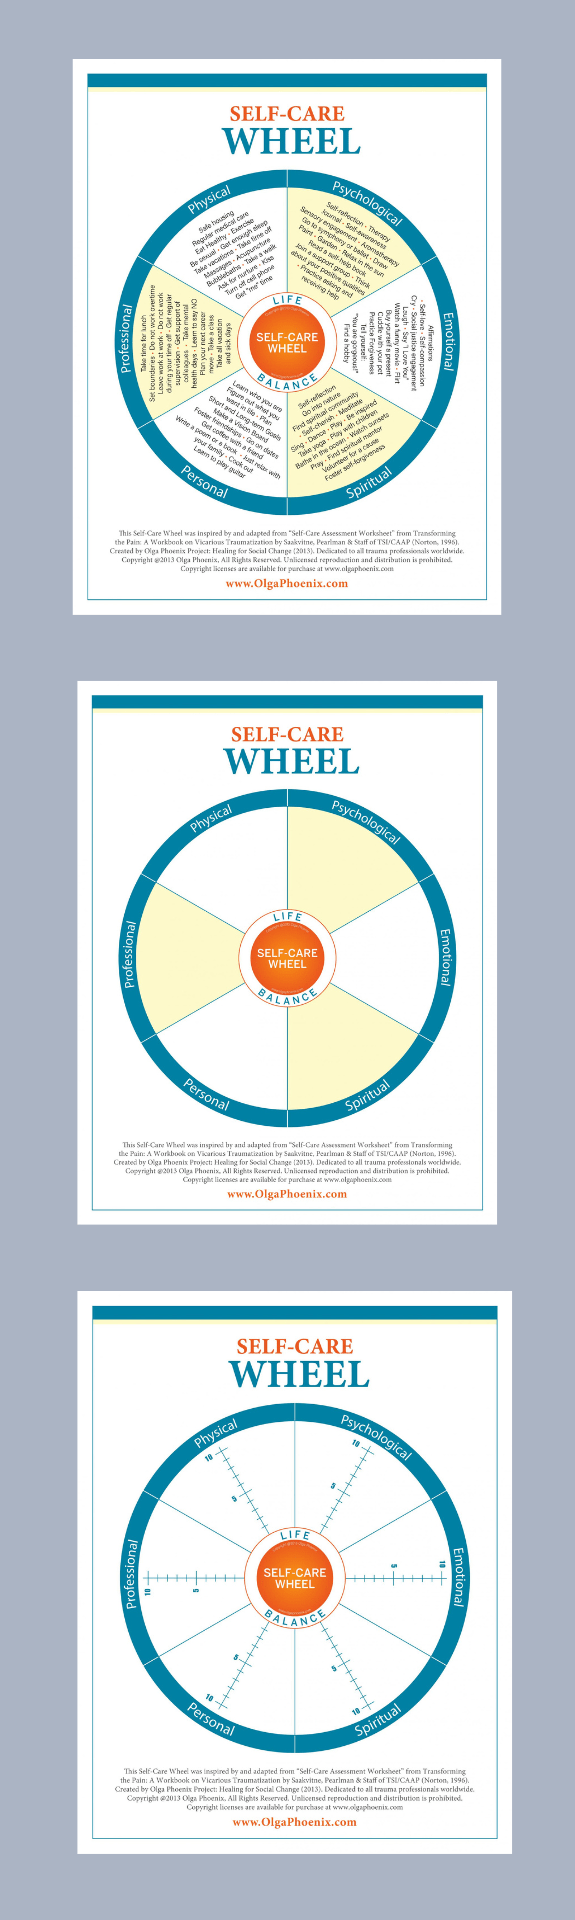 Self Care Wheels